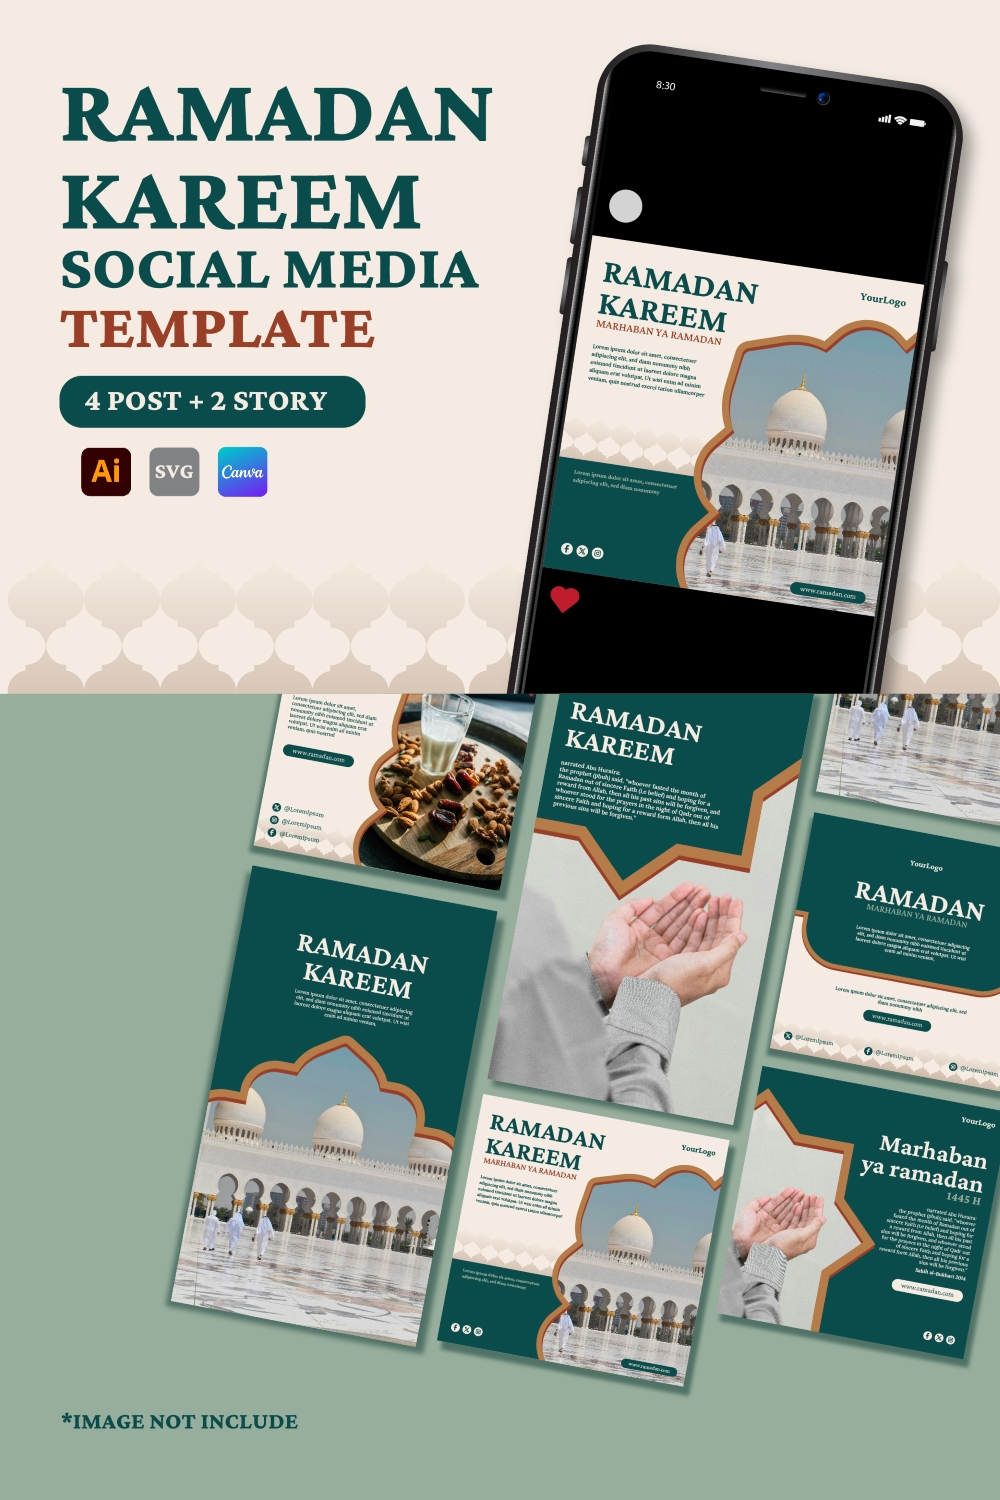 Ramadan Kareem Social Media Instagram template set, 4 Square + 2 story pinterest preview image.